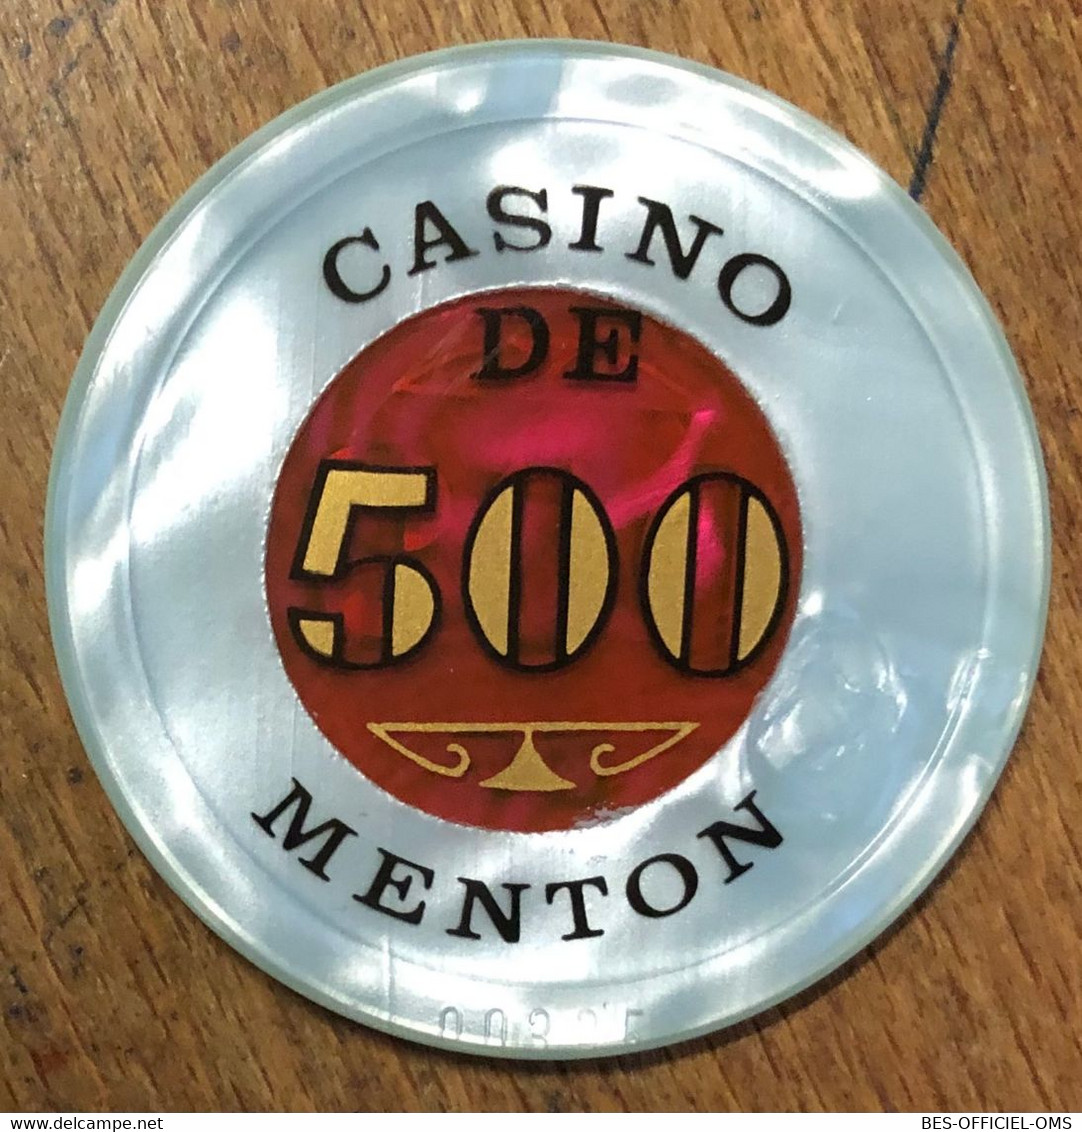 06 MENTON CASINO JETON DE 500 FRANCS N° 00305 CHIP COINS TOKENS GAMING - Casino